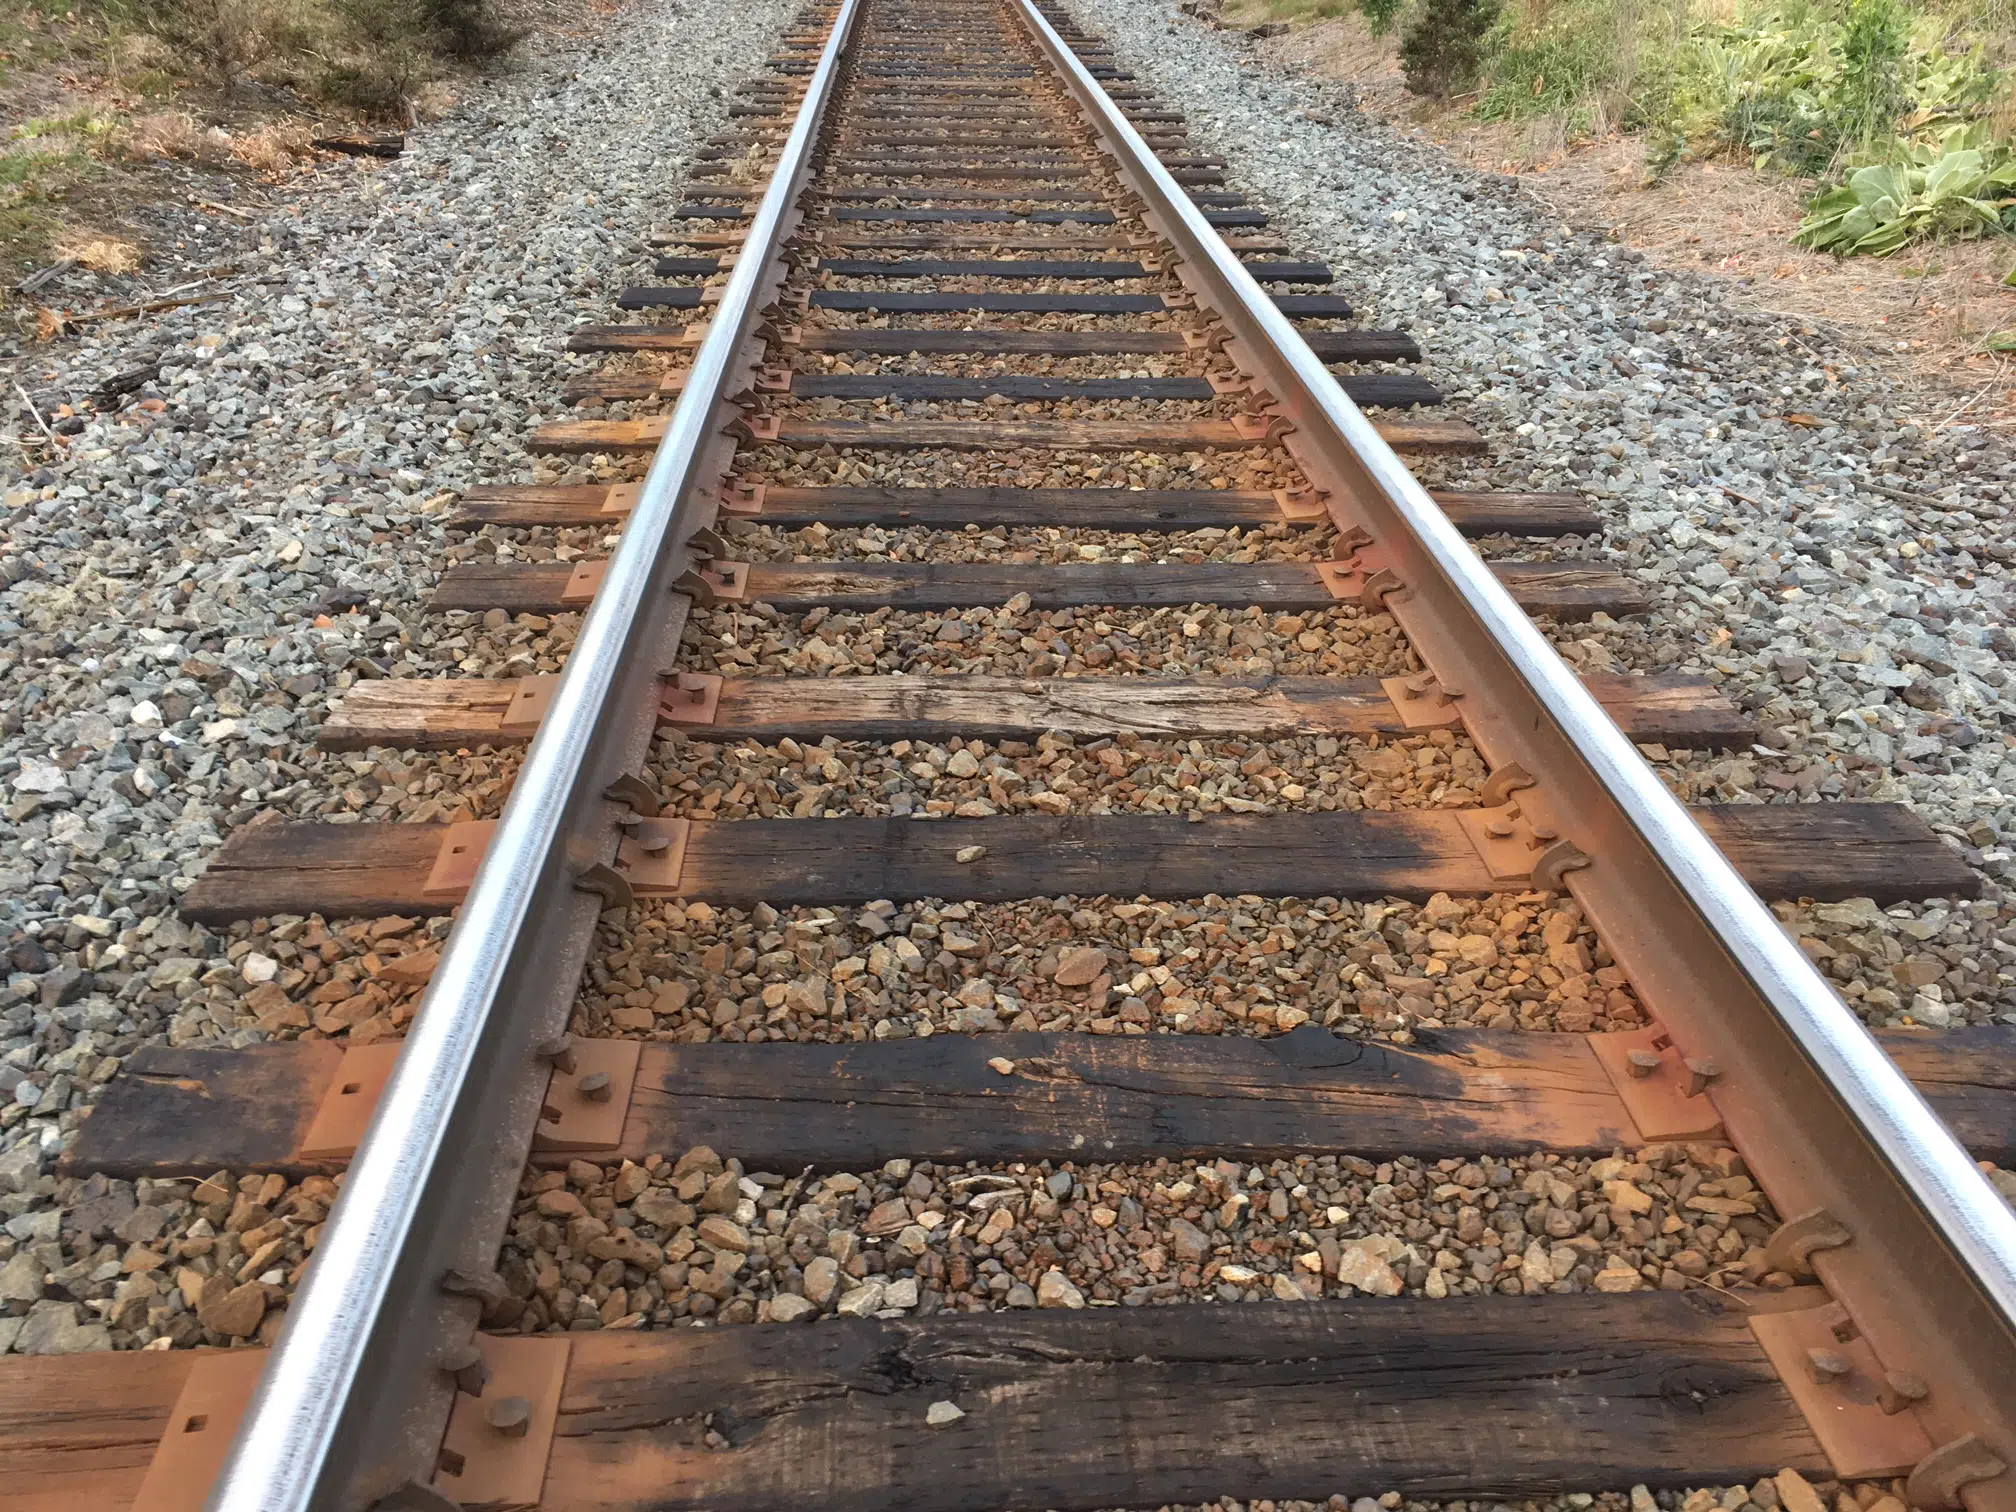 Railway tampering in Belleville